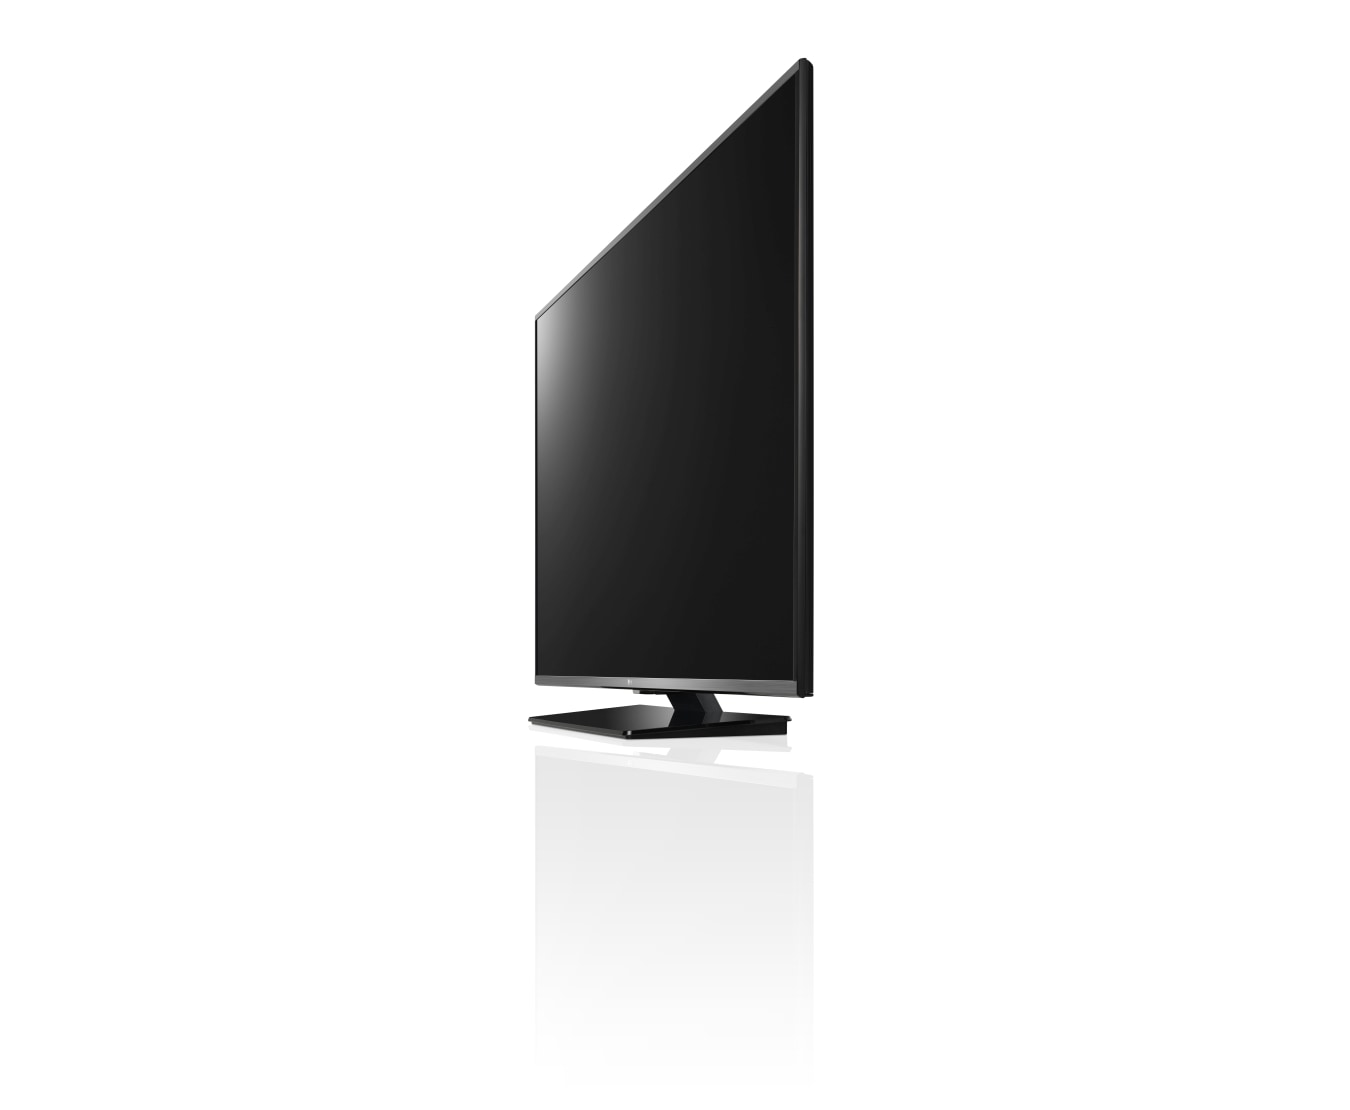 TV LG 40 Pulgadas 1080p Full HD Smart TV LED 40LF6300